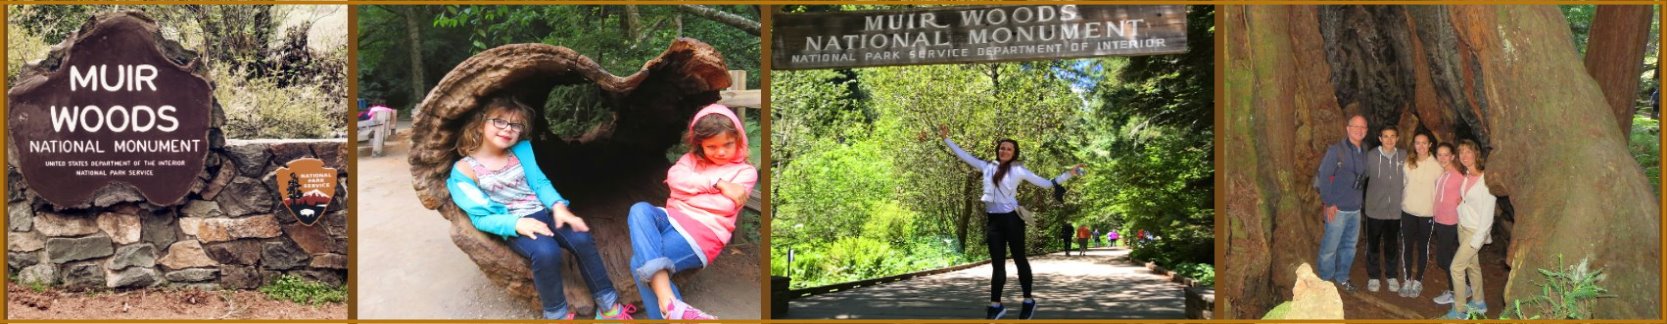 muir-woods-trail-walk-park-loop-redwood-forest-map